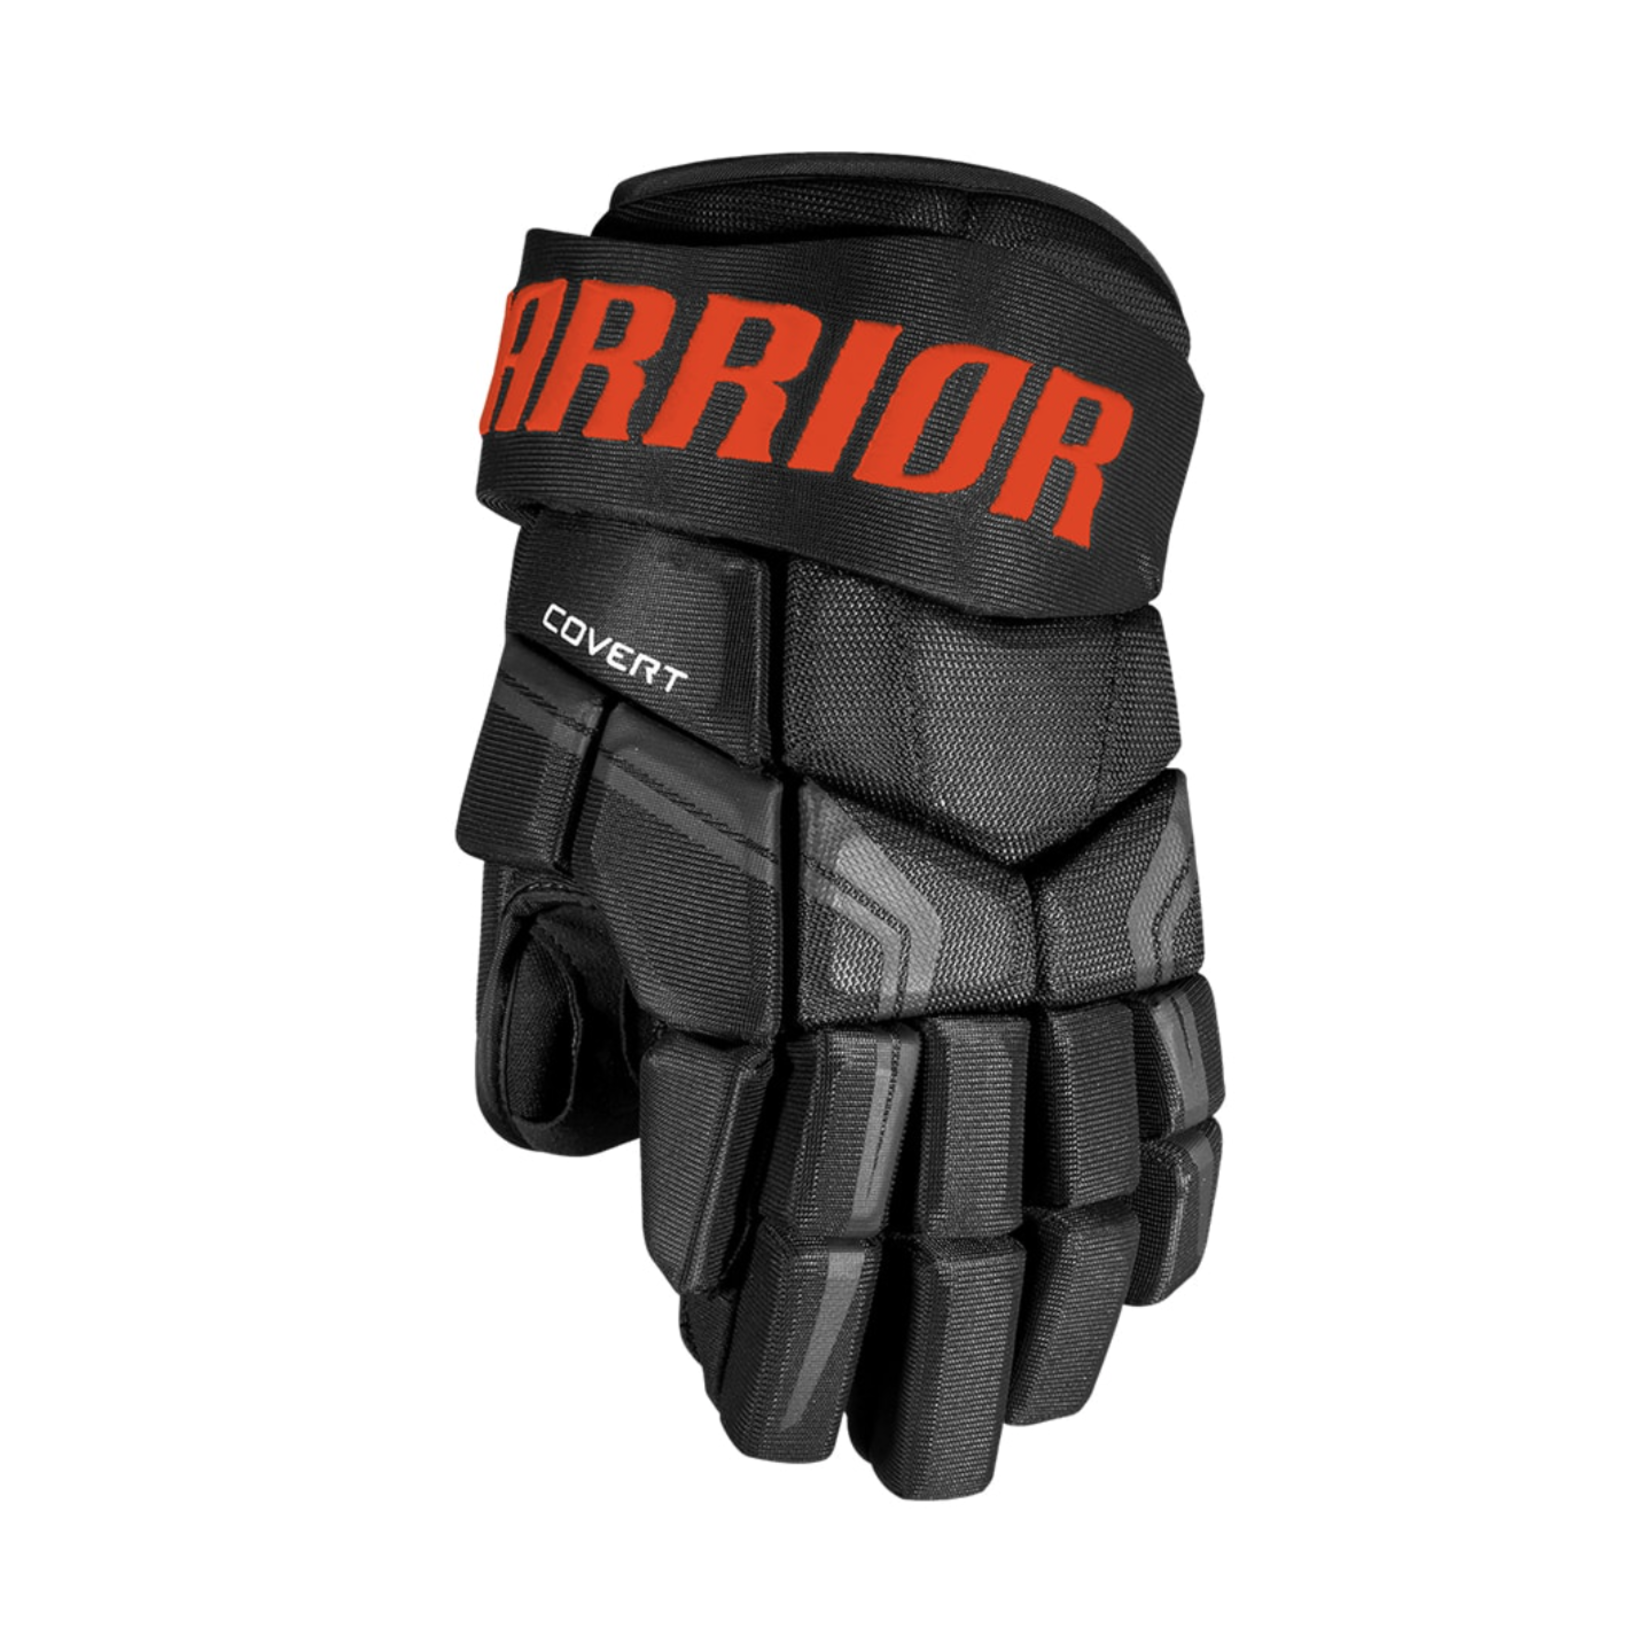 Warrior Warrior Covert QRE 4 Junior Glove